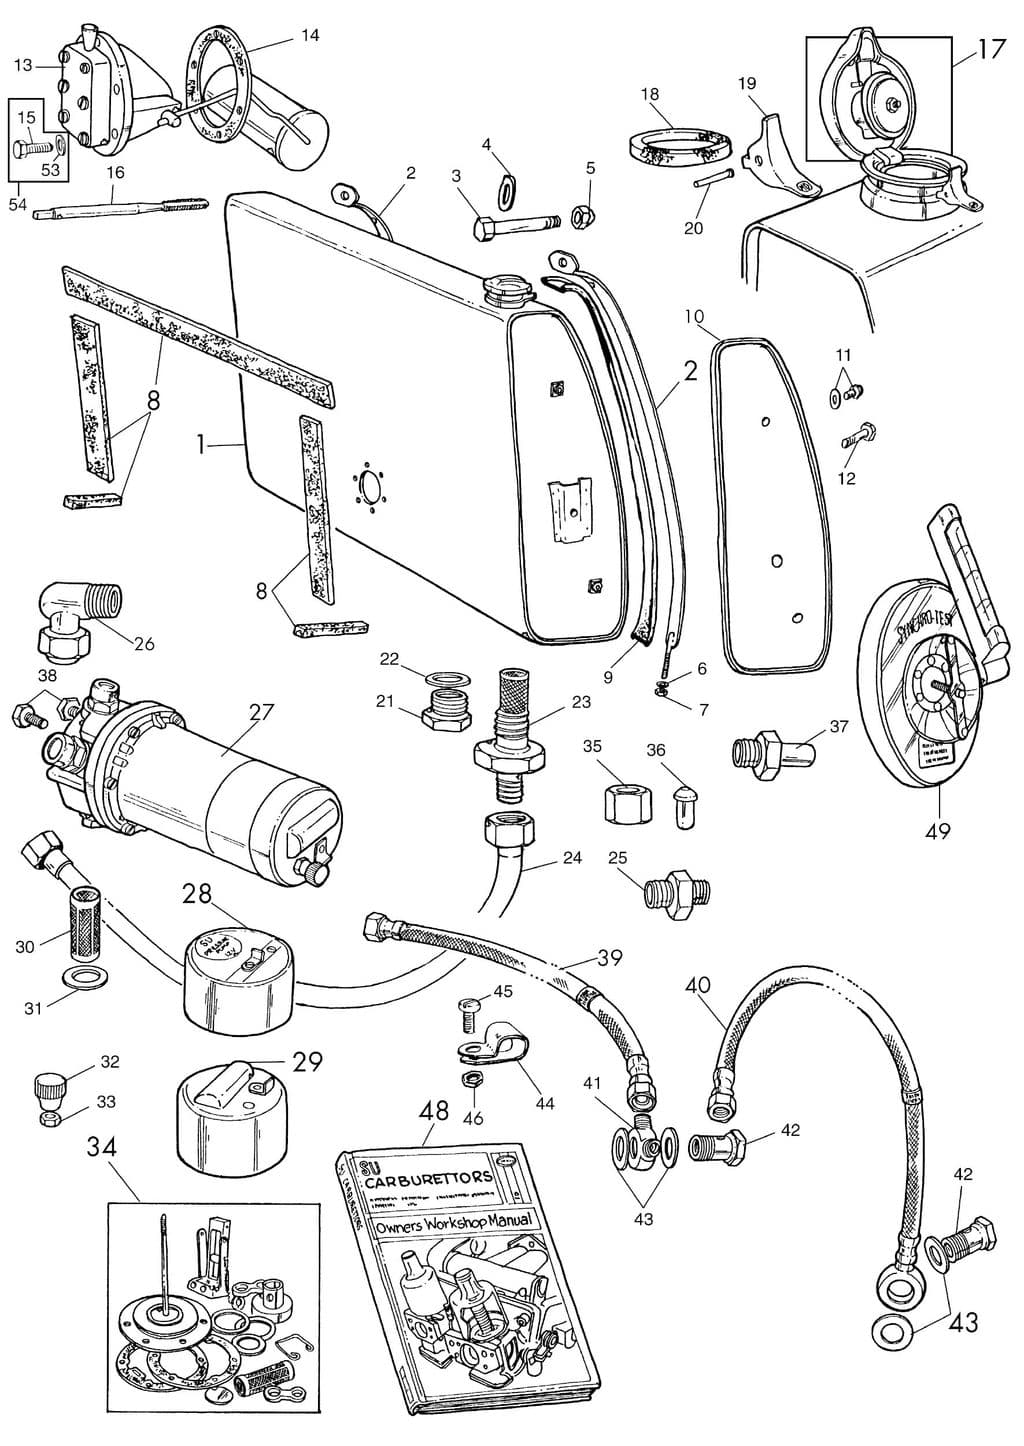 MGTC 1945-1949 - Fuel pumps | Webshop Anglo Parts - Fuel system - 1